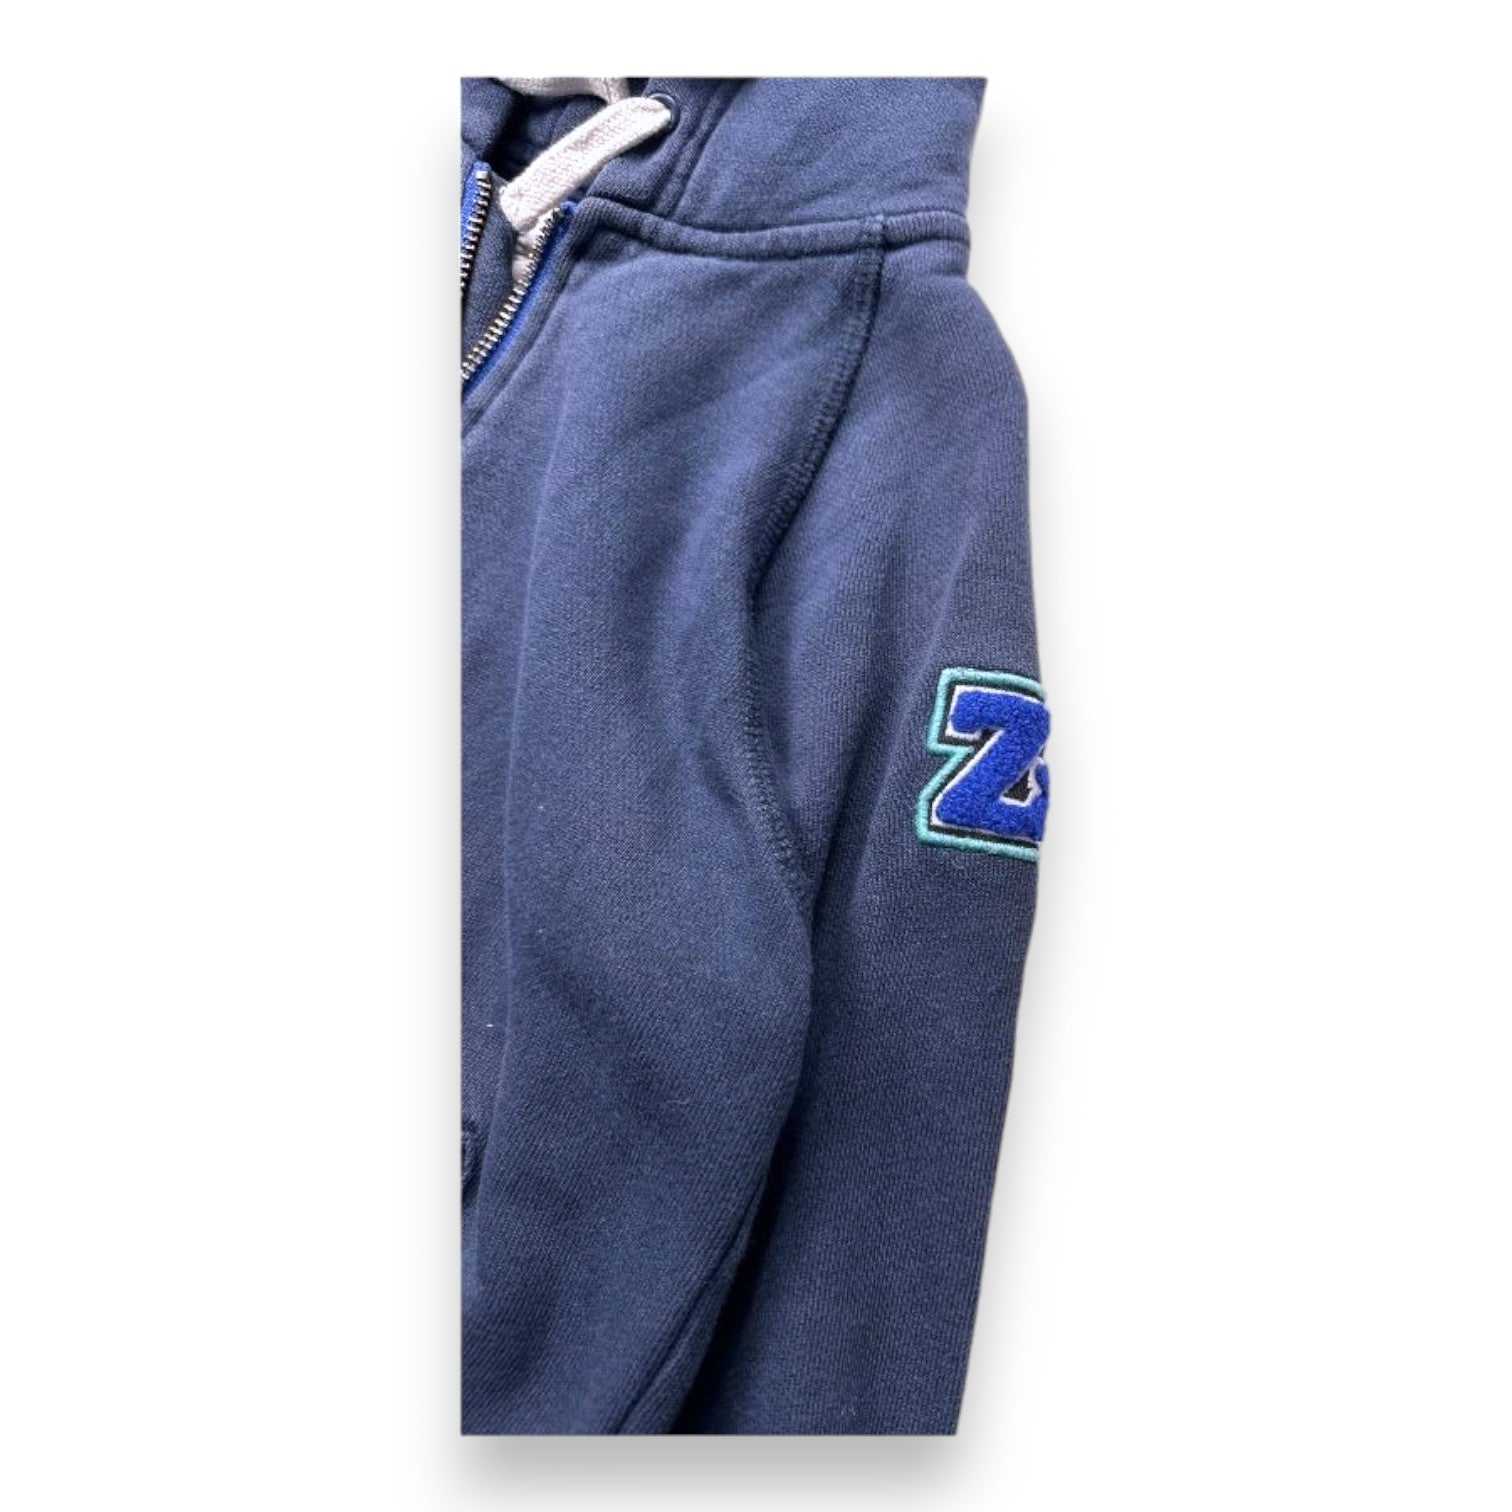 ZADIG & VOLTAIRE - Sweat à capuche bleu marine - 10 ans